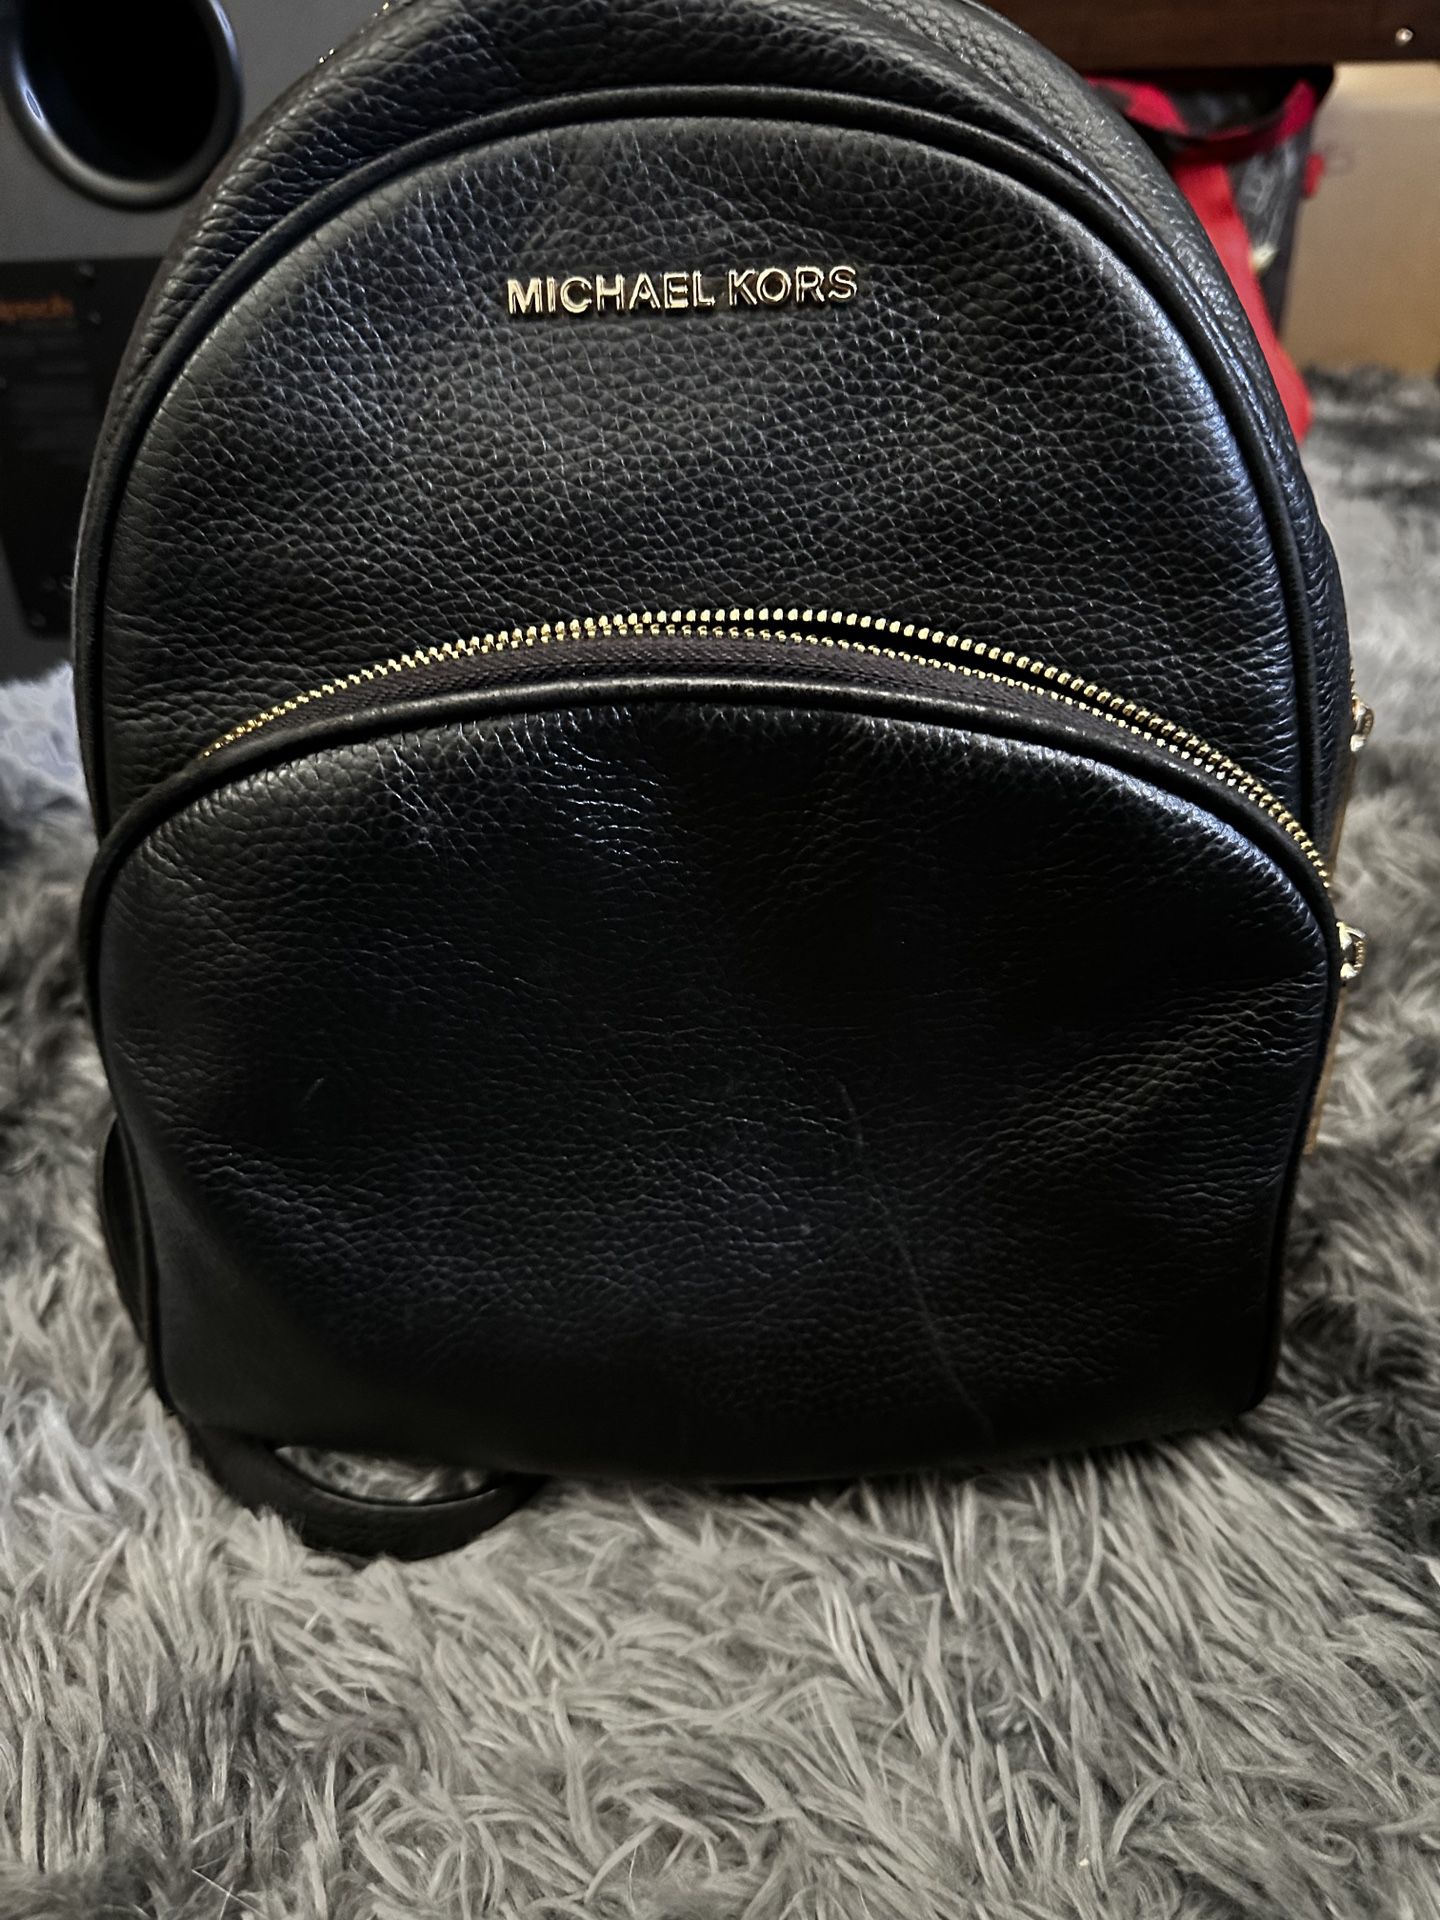 Michael Kors Backpack